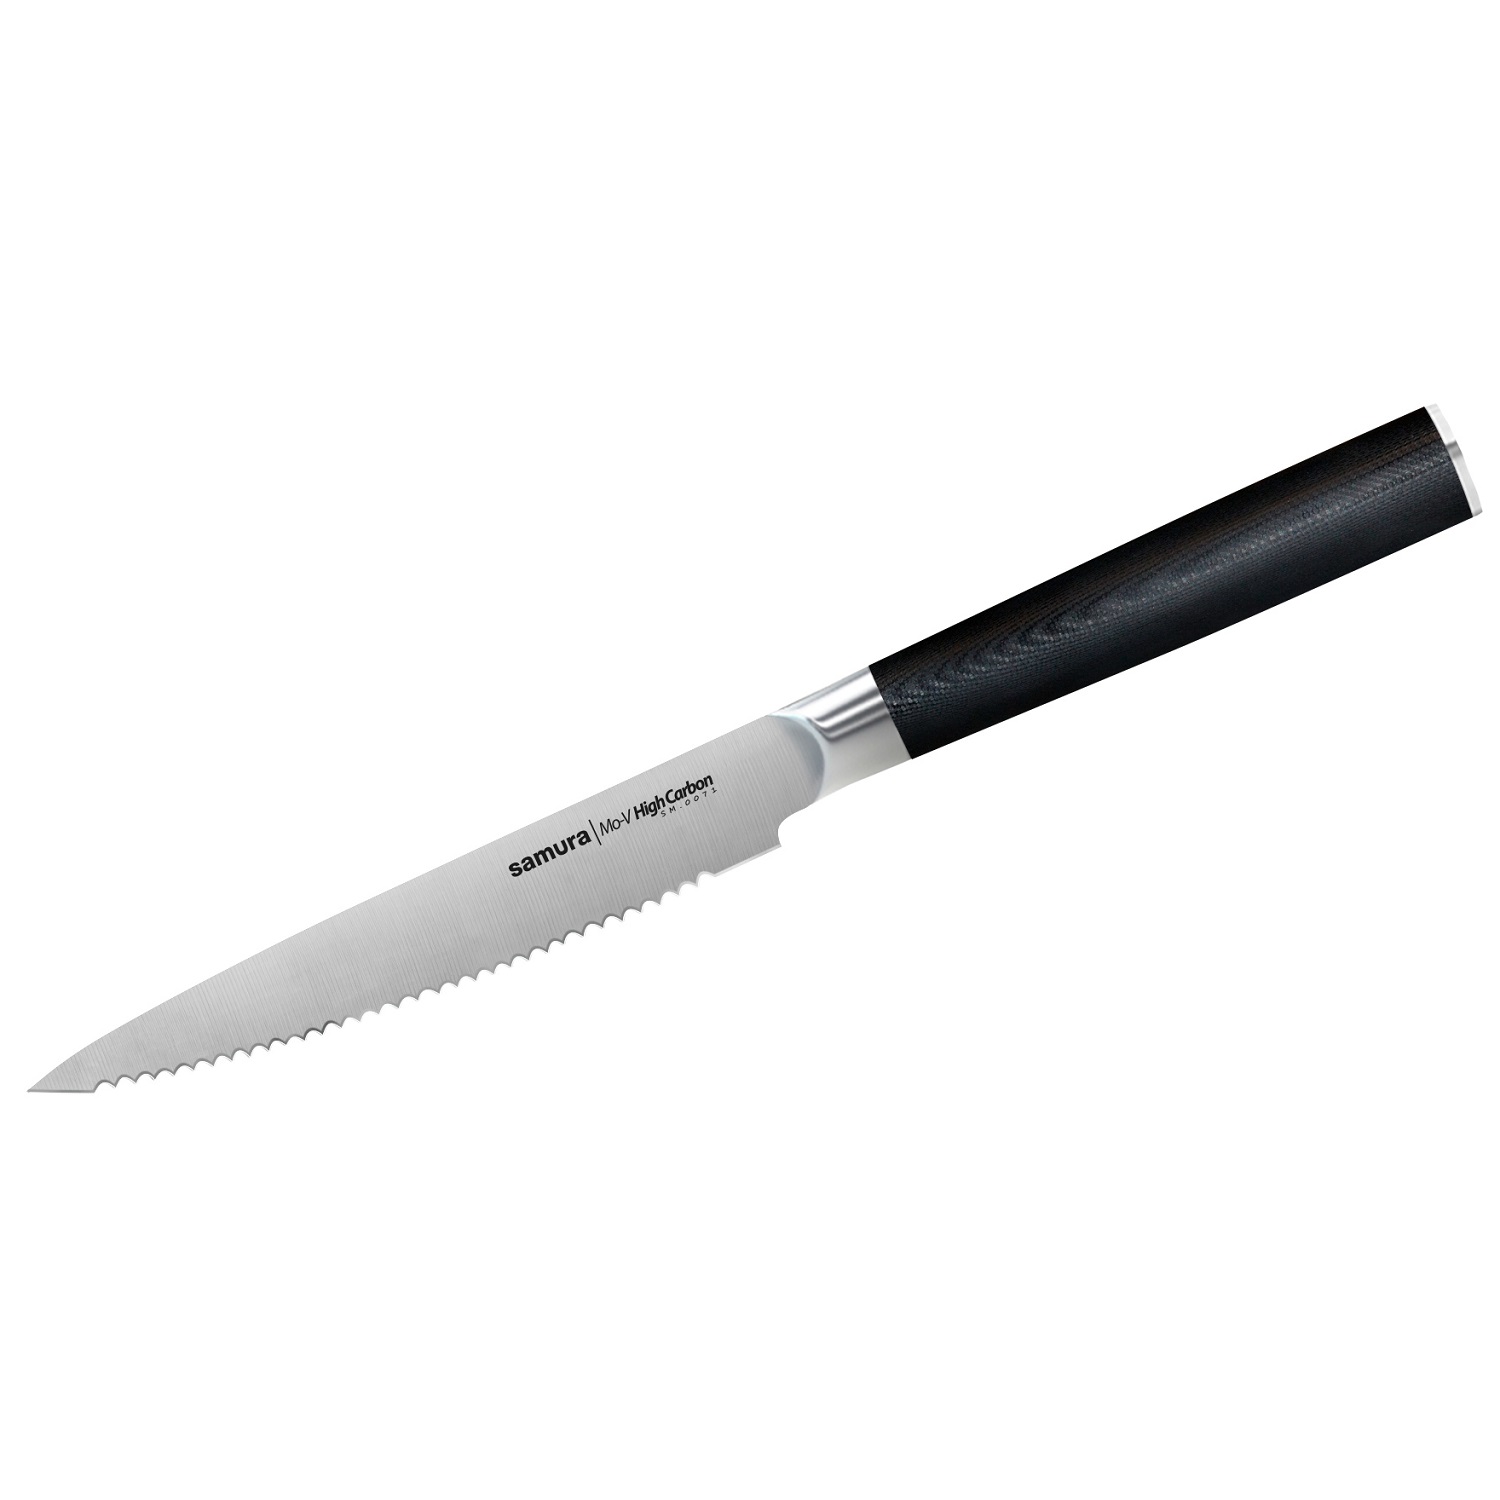 Нож Samura для томатов Mo-V, 12 см, G-10 нож samura обвалочный mo v 16 5 см g 10